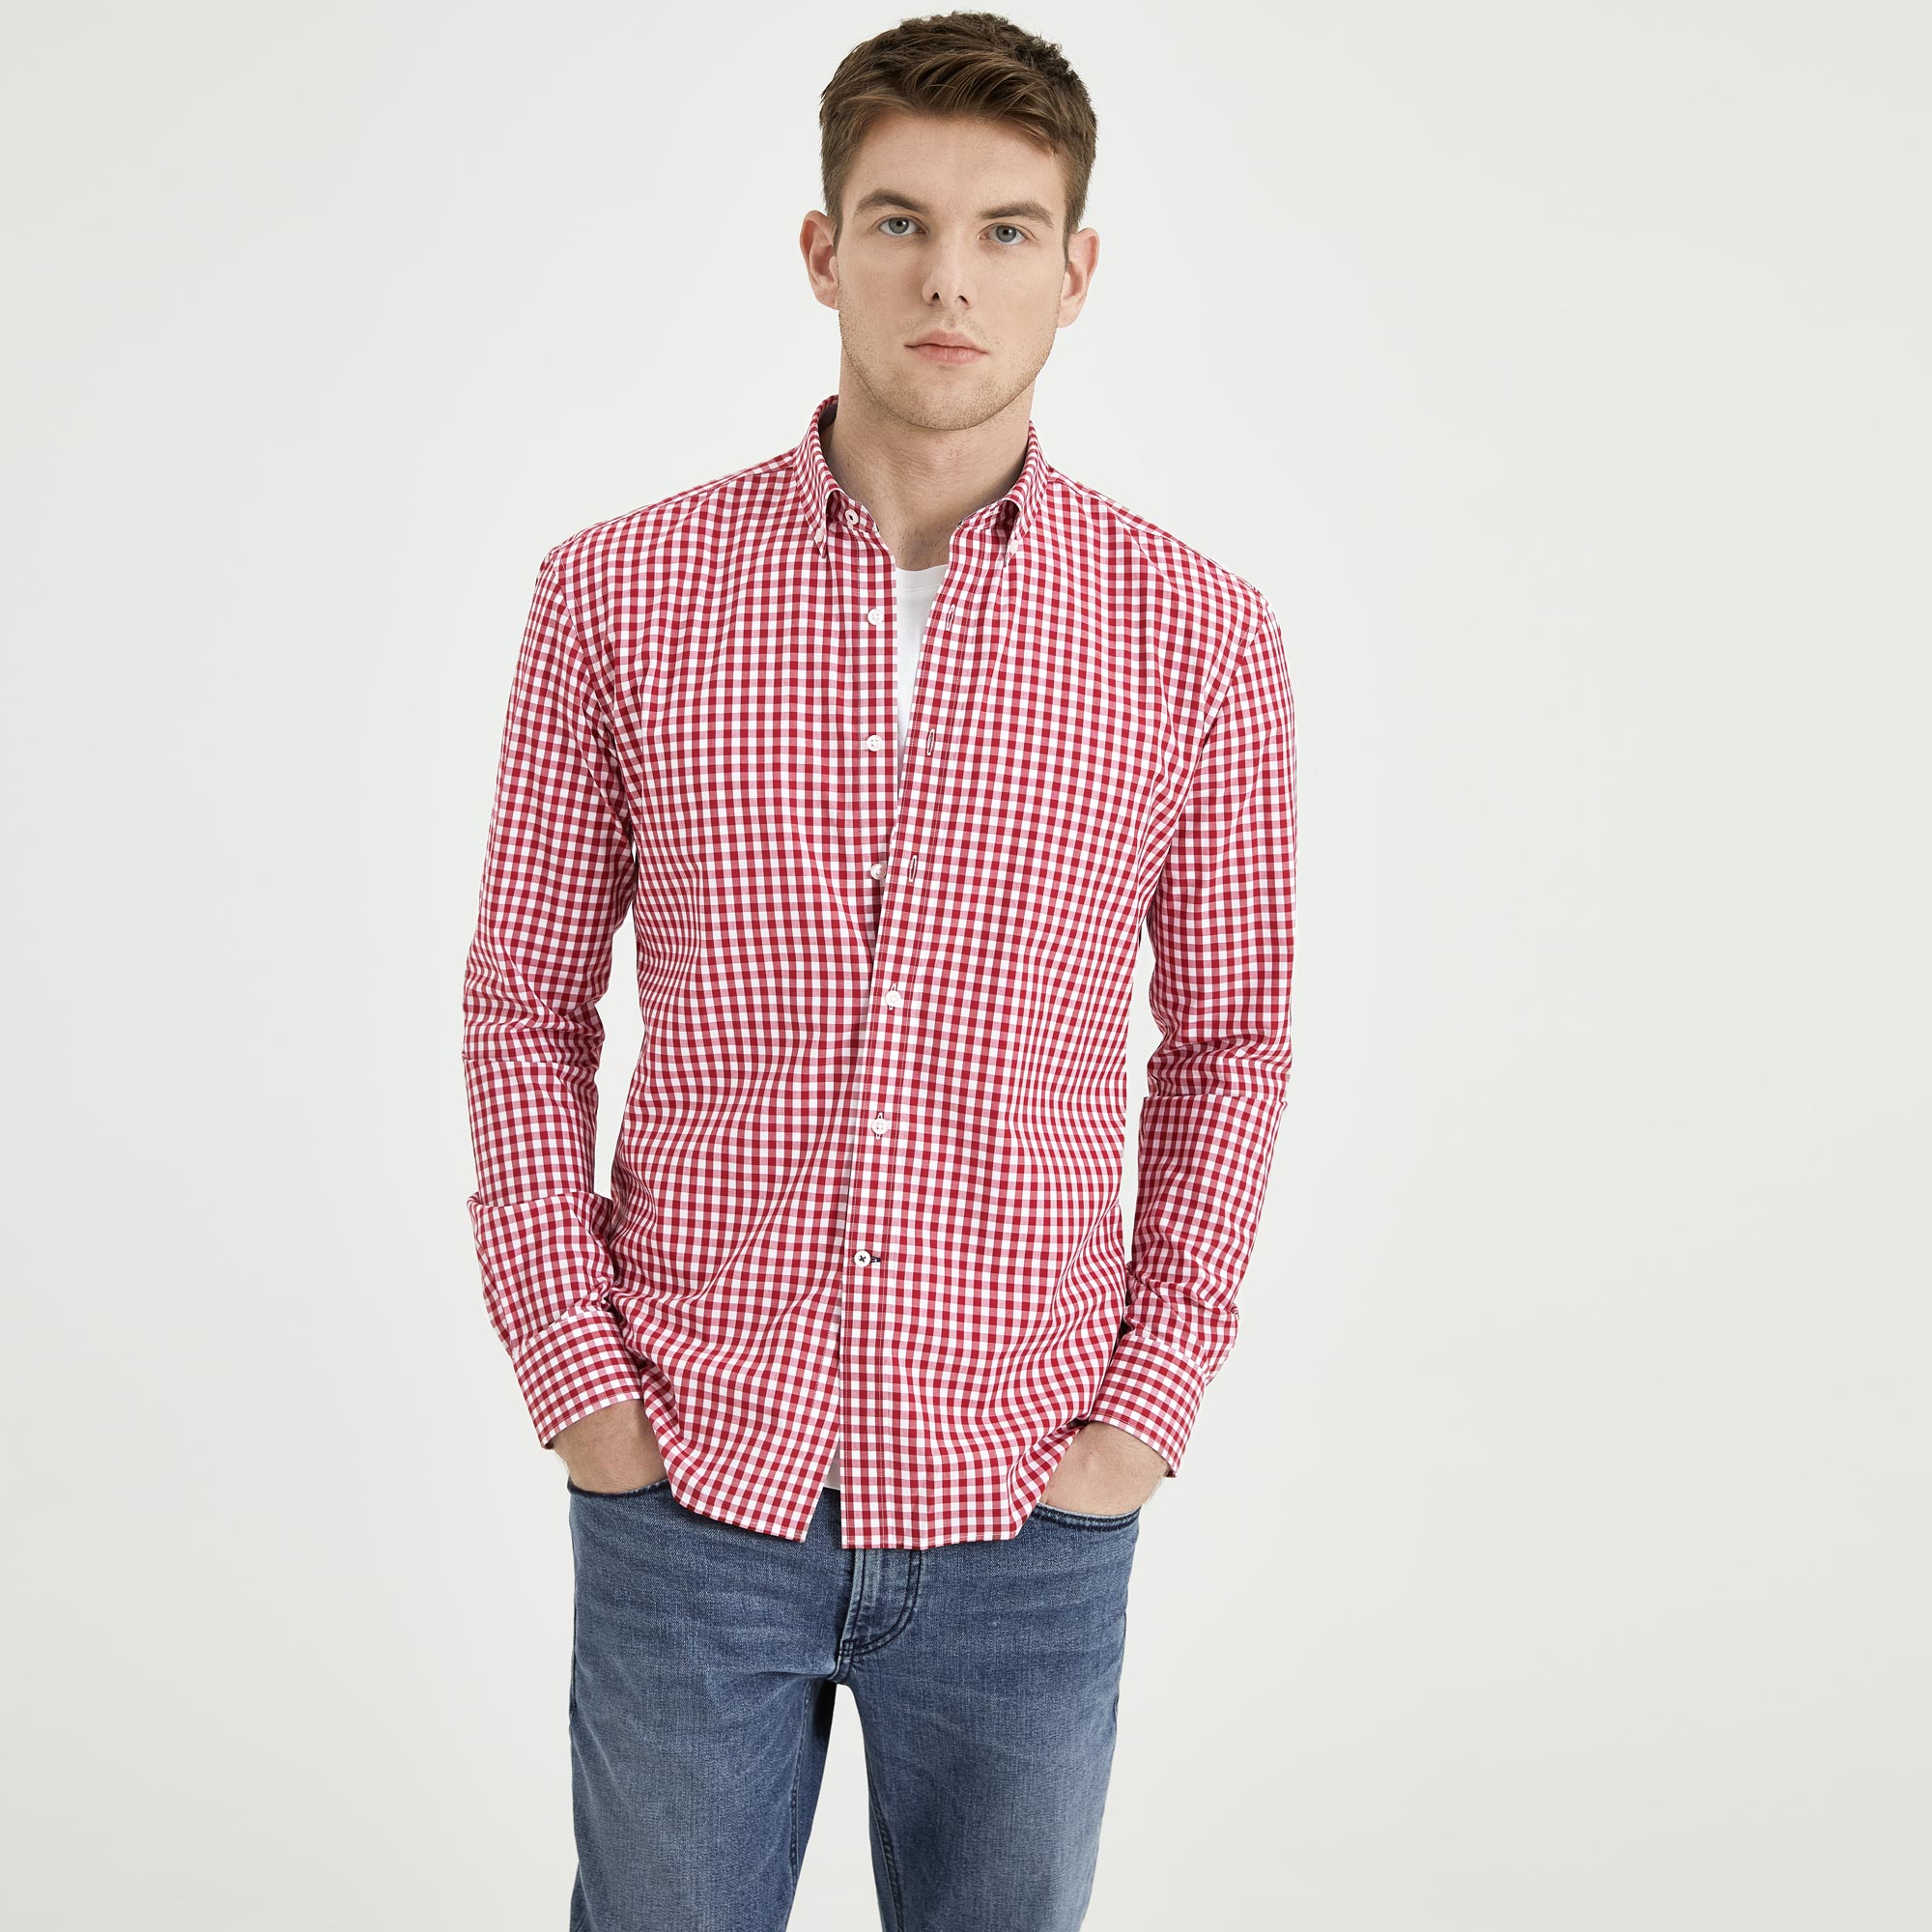 SmartFive 撞色修身红色格子衬衫男长袖纯棉时尚青年美式休闲衬衣